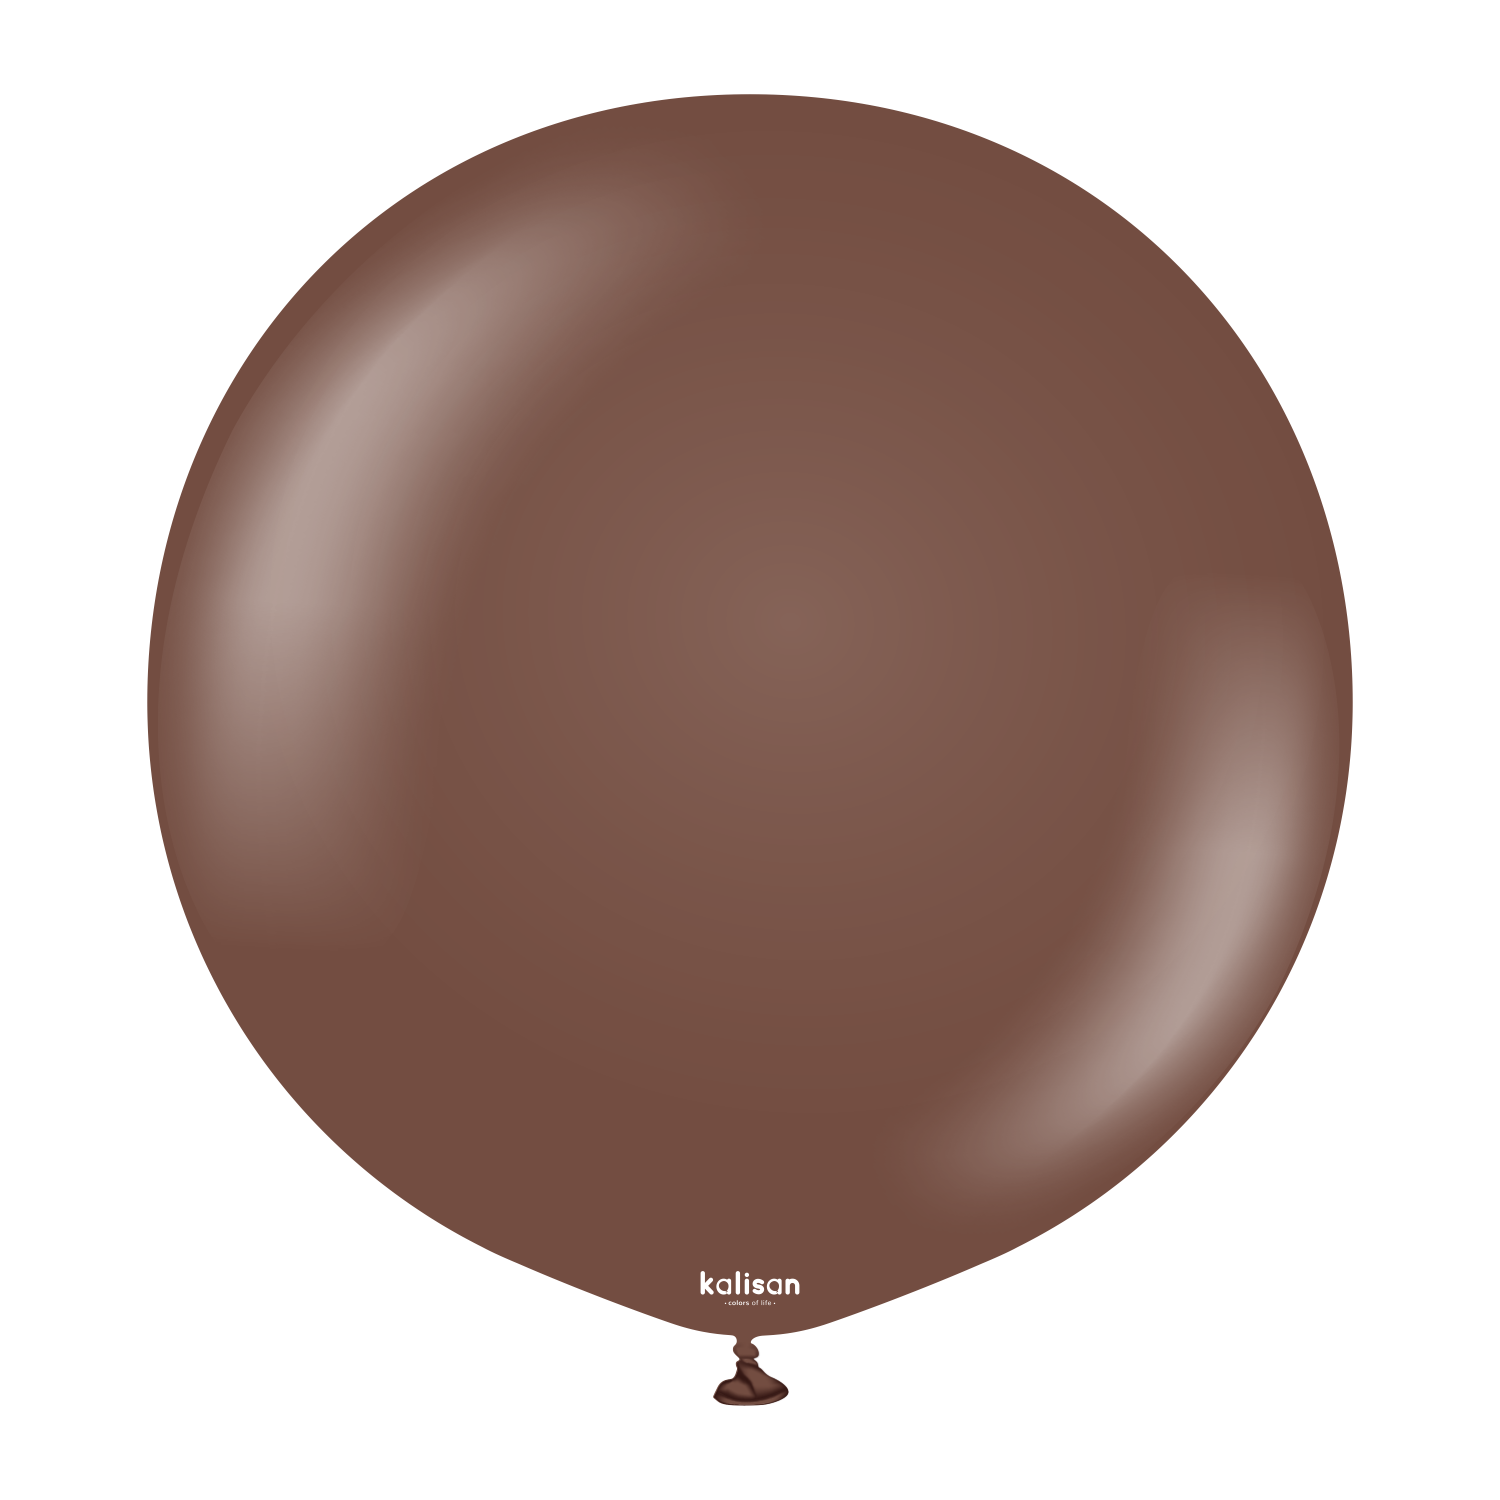 Premium lateksballong Kalisan i sjokoladebrun farge 